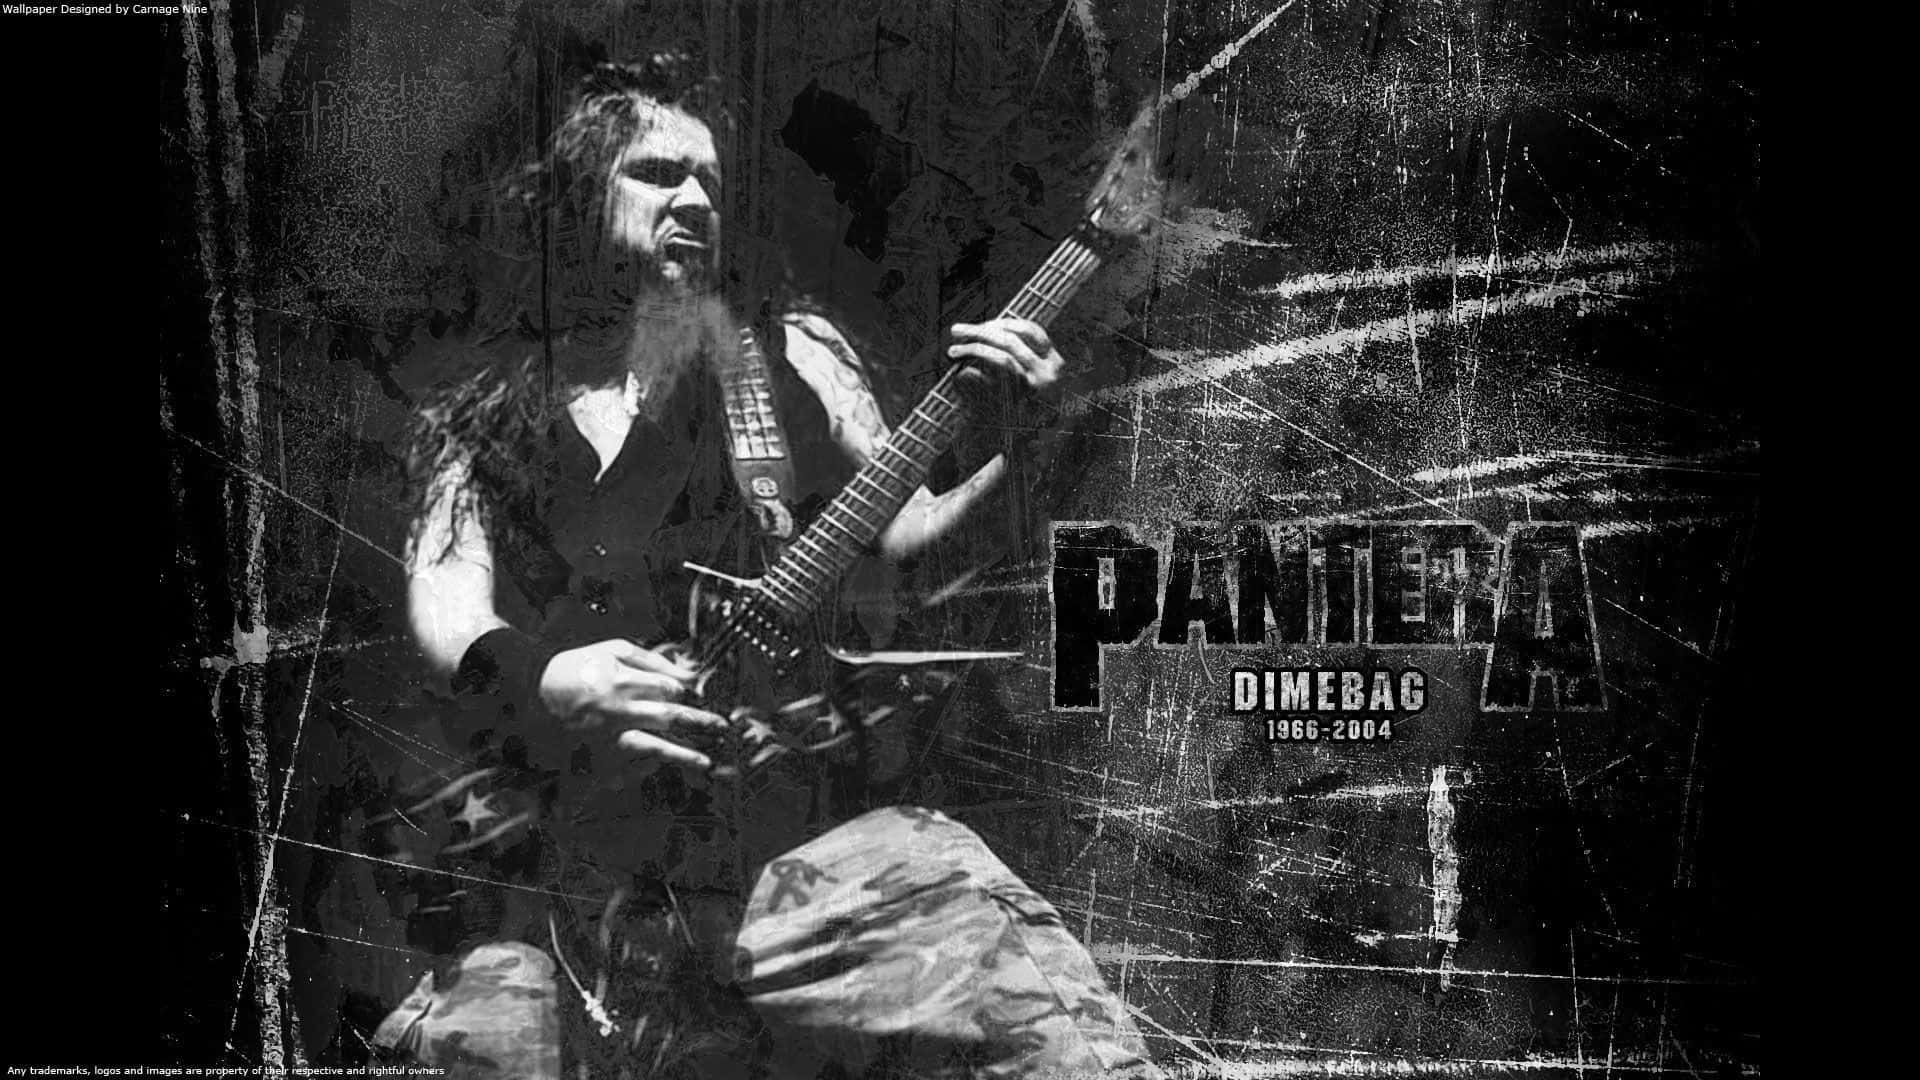 Hear the thunderous sound of Pantera's heavy metal Wallpaper